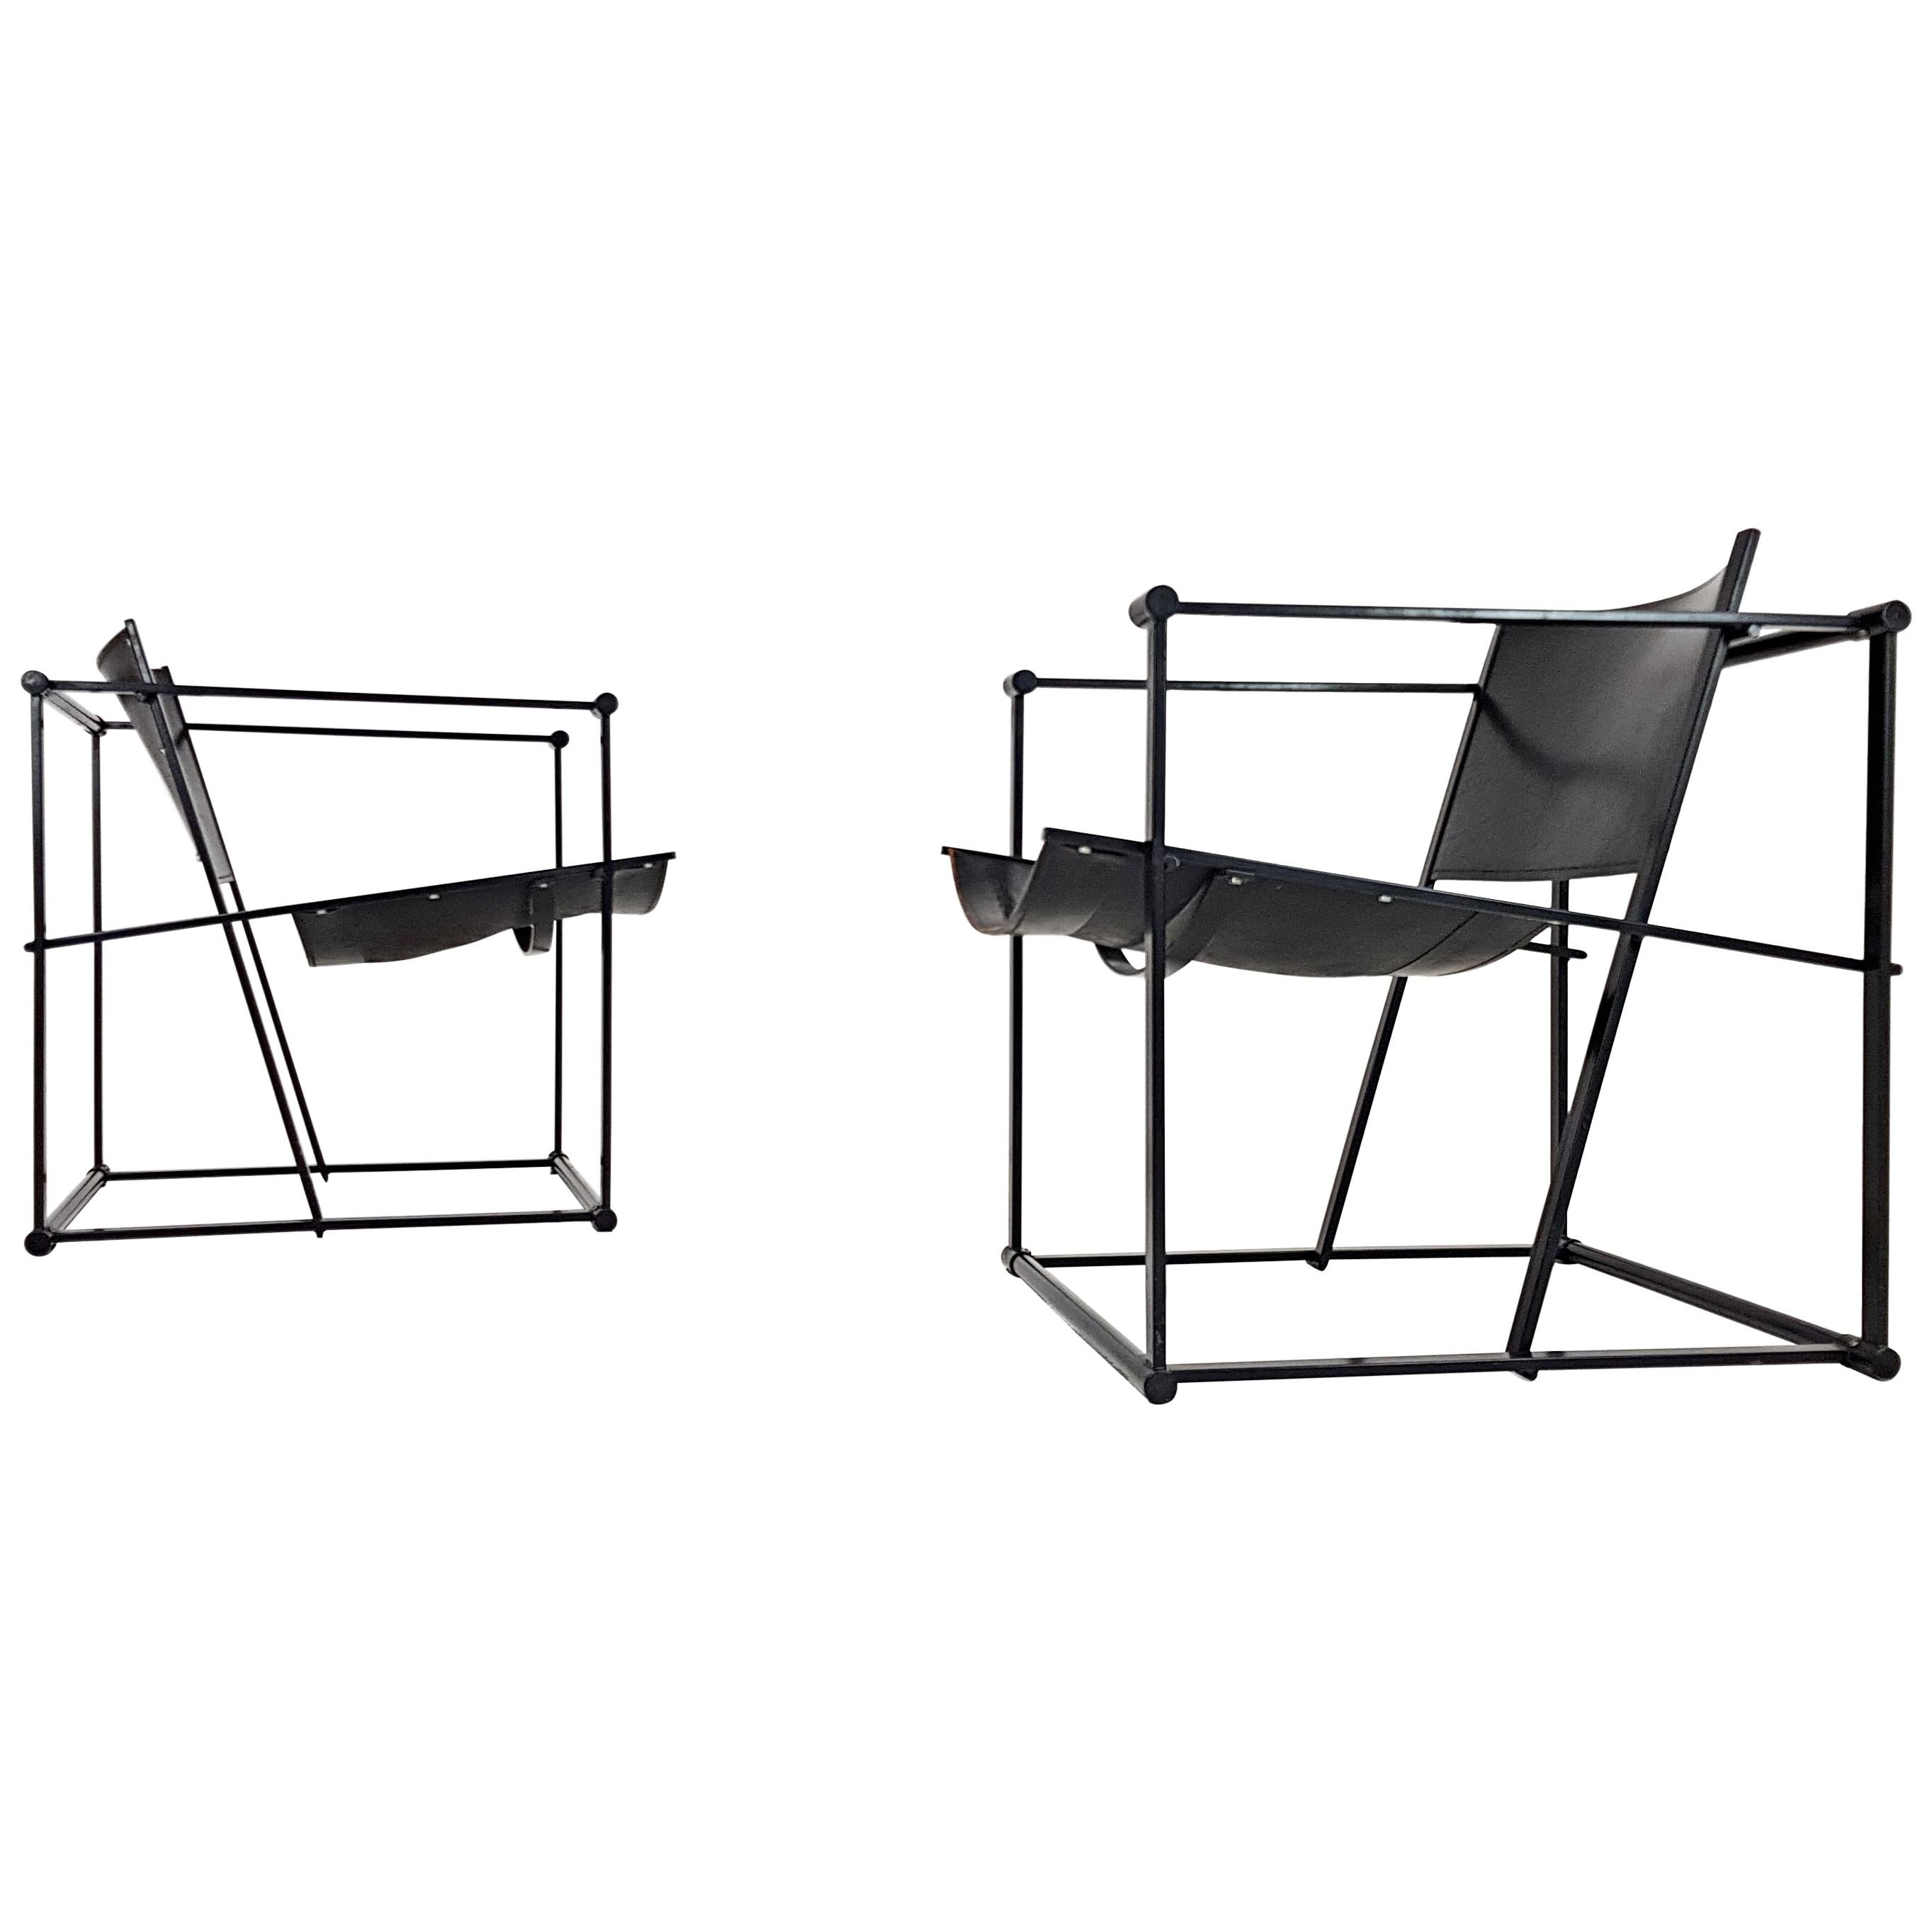 Pair of Steel and Leather FM62 Chairs by Radboud Van Beekum for Pastoe, 1980s